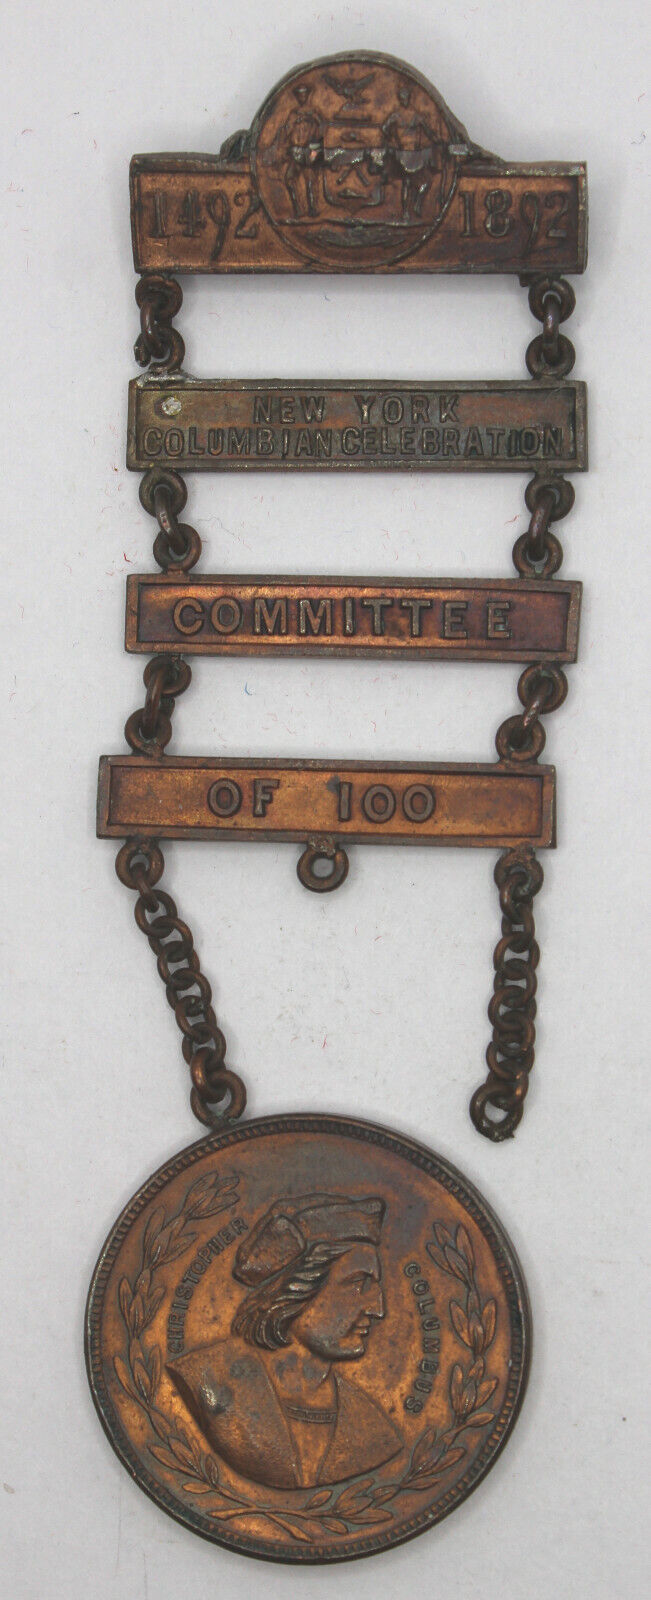 Scarce 1892 New York Columbian Celebration Committee of 100 Ladder Badge / E-210